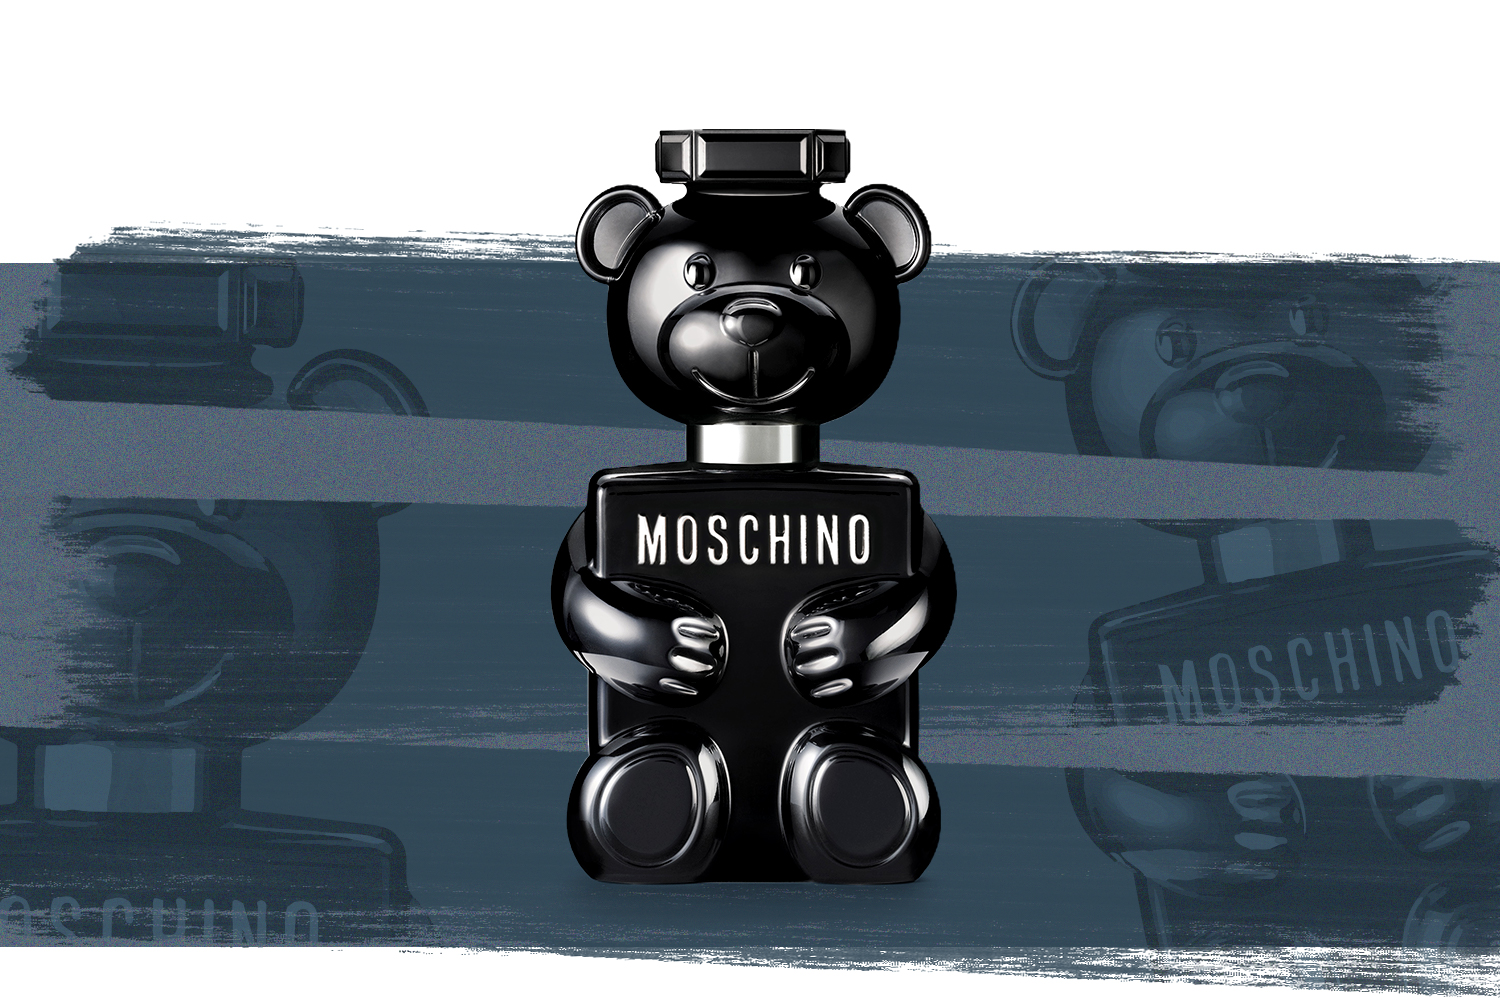 Moschino Lookbook UPDATED Black